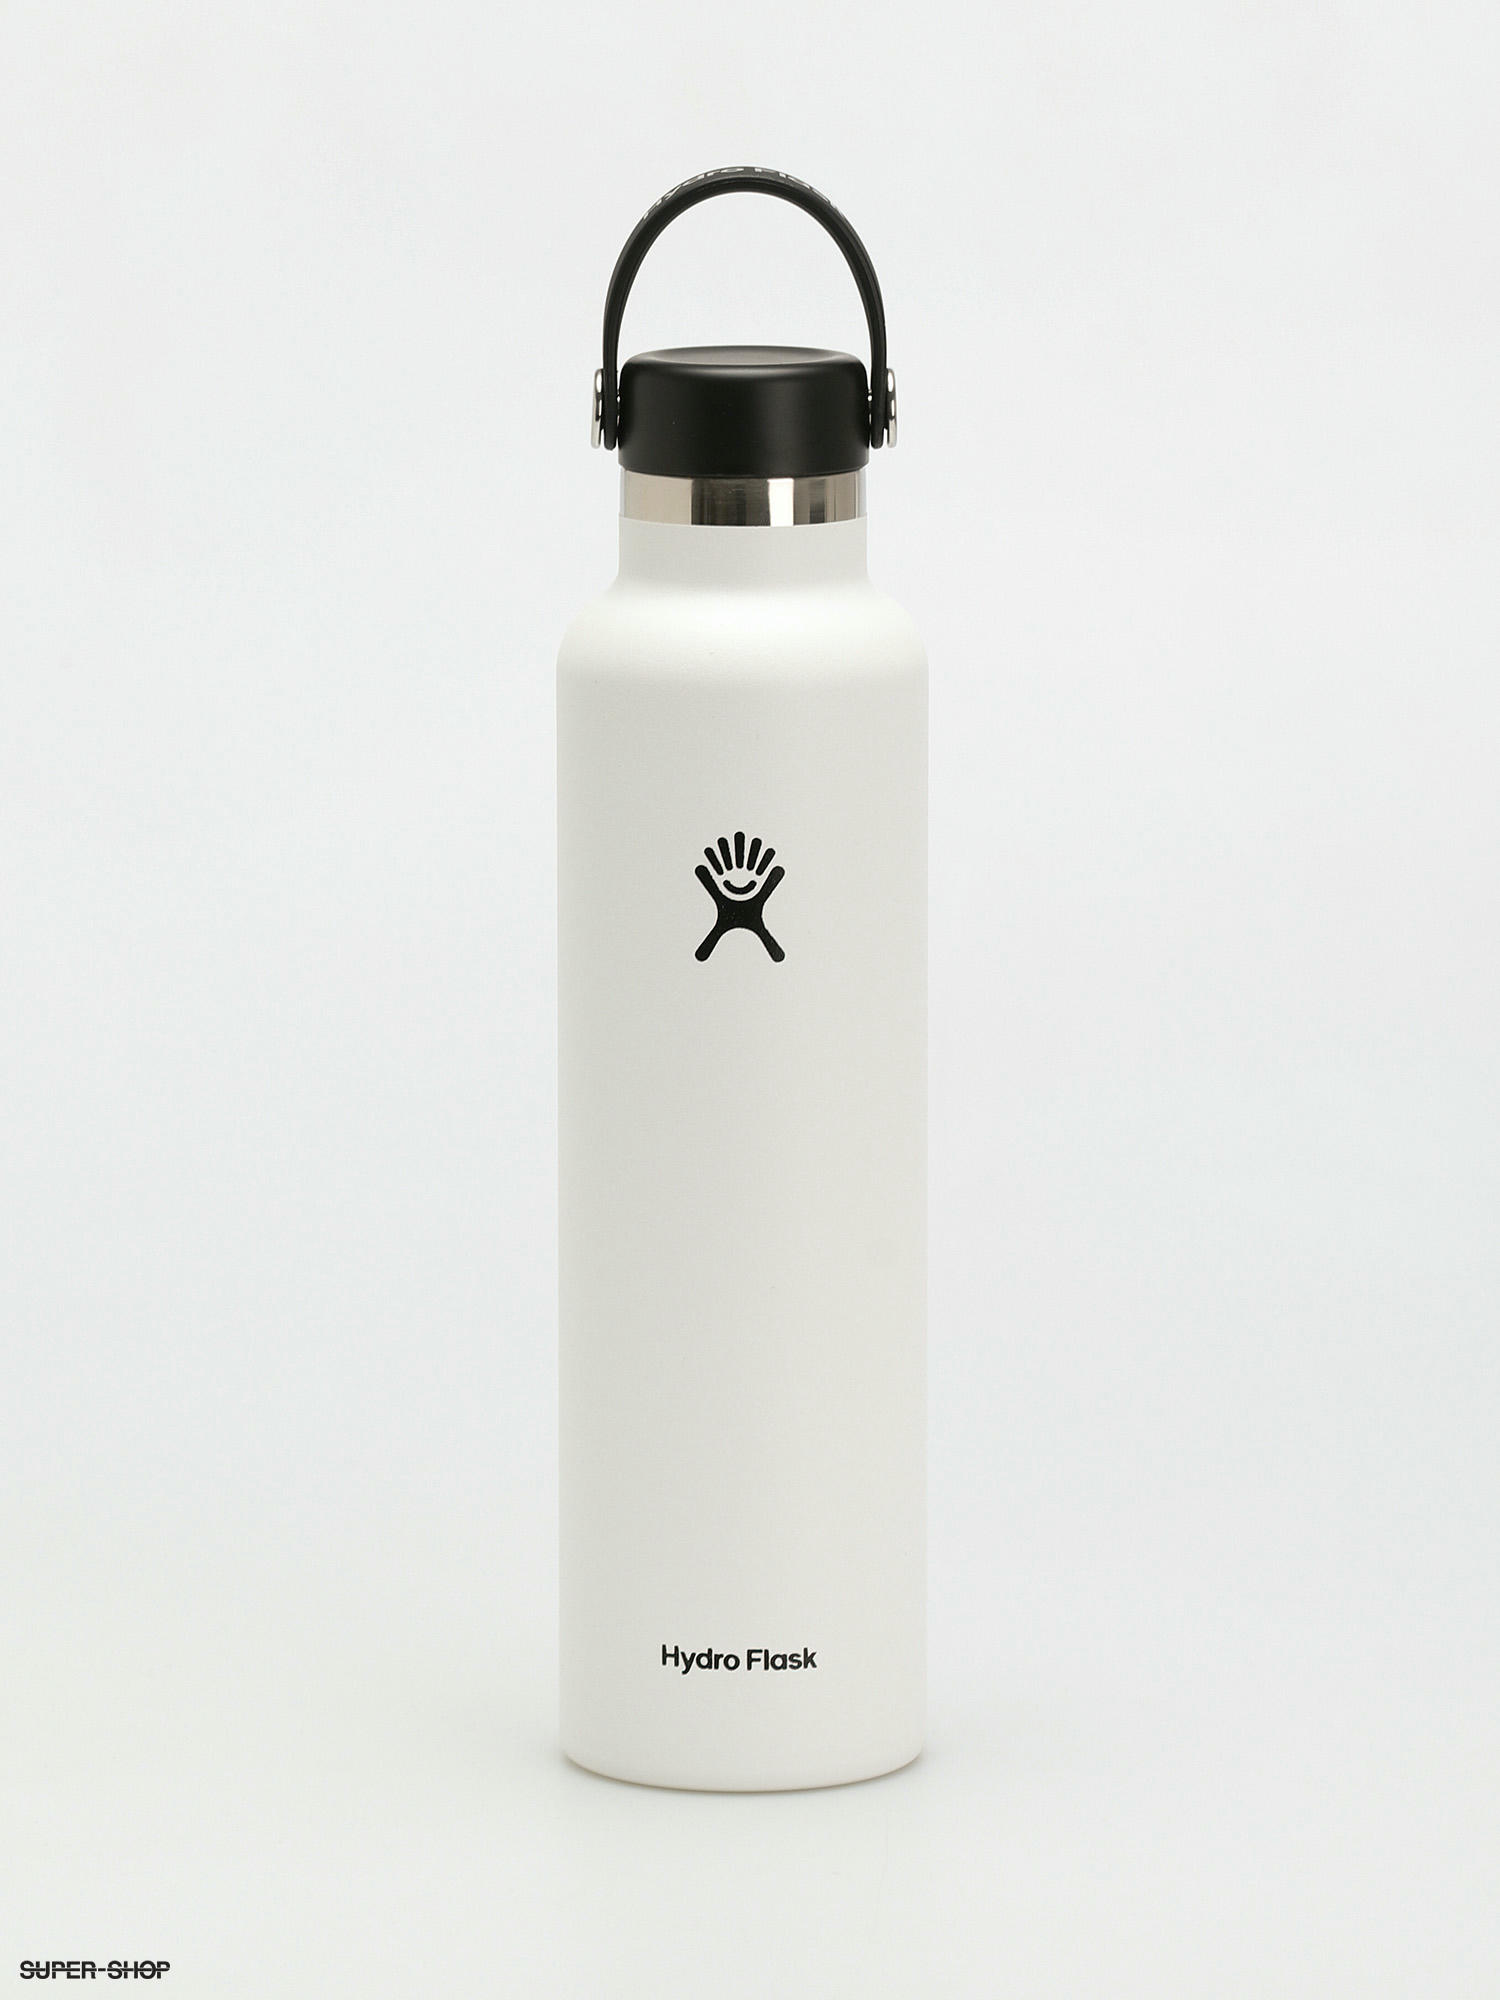 https://static.super-shop.com/1292206-hydro-flask-bottle-standard-mouth-flex-cap-710ml-white.jpg?w=1920